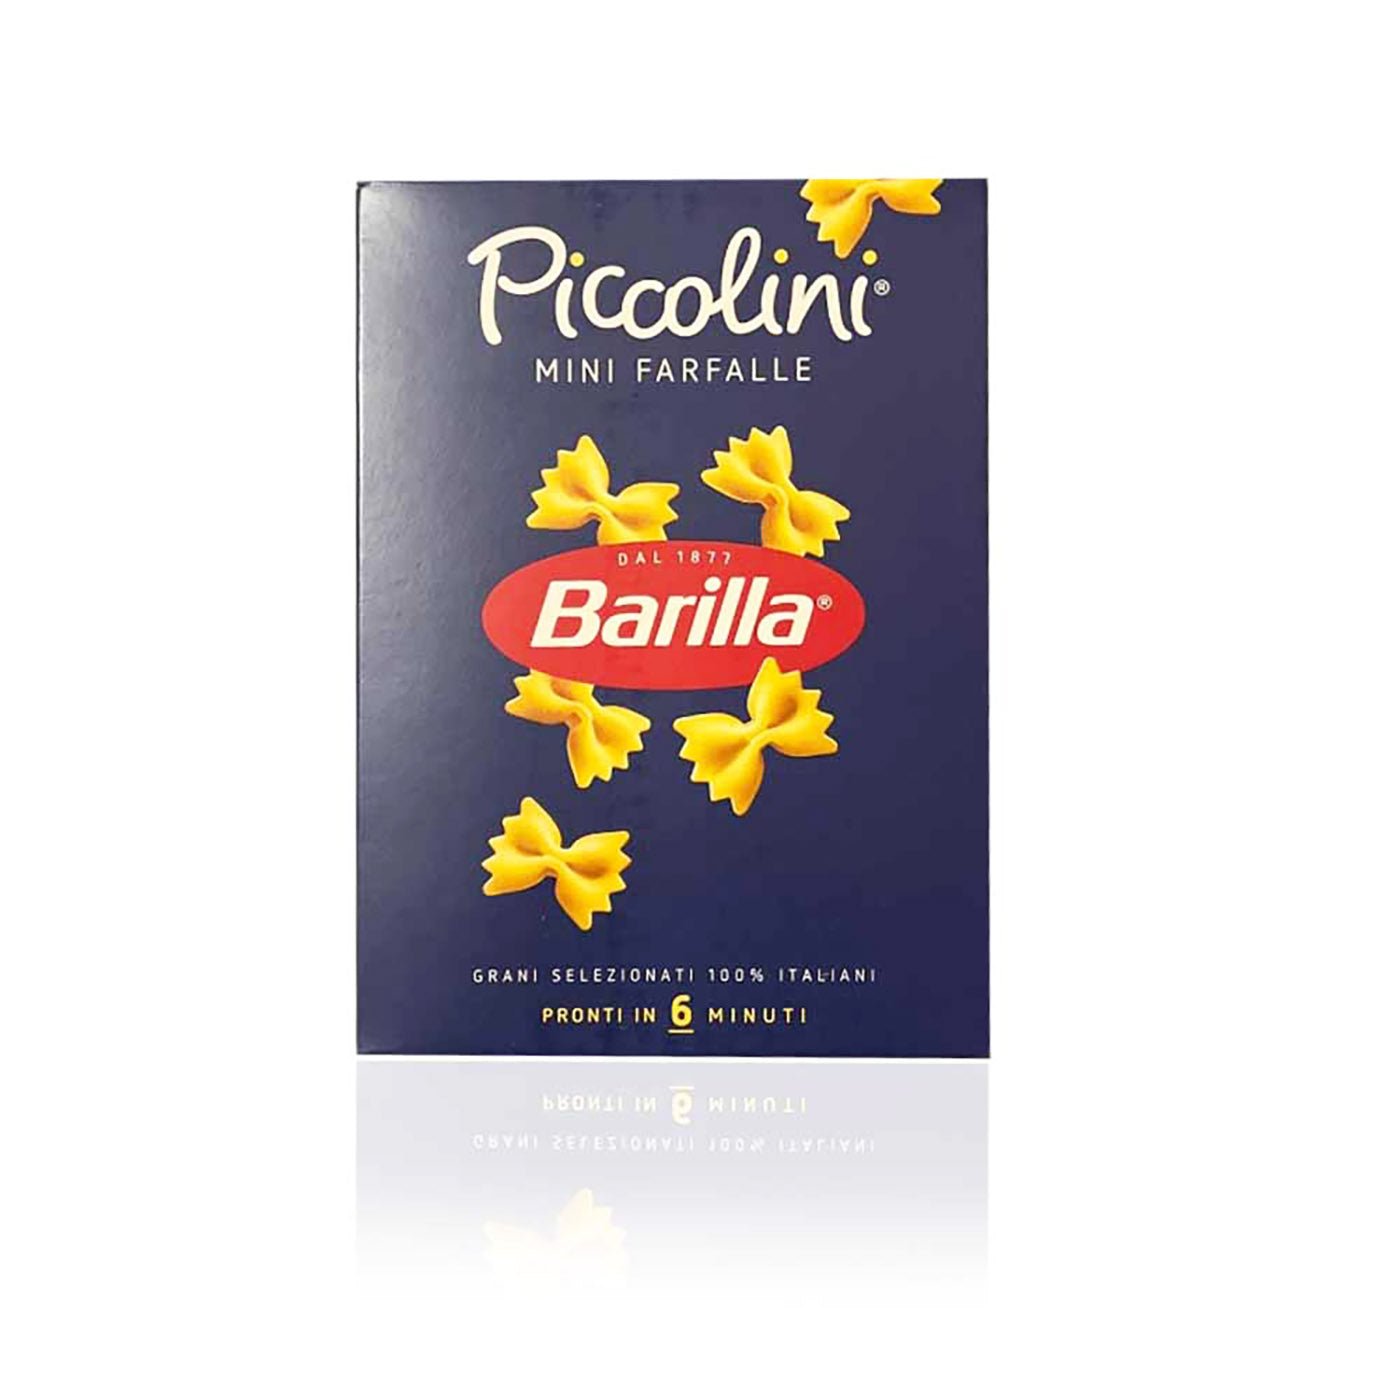 BARILLA Piccolini Farfalle - 0,500kg - italienisch - einkaufen.de